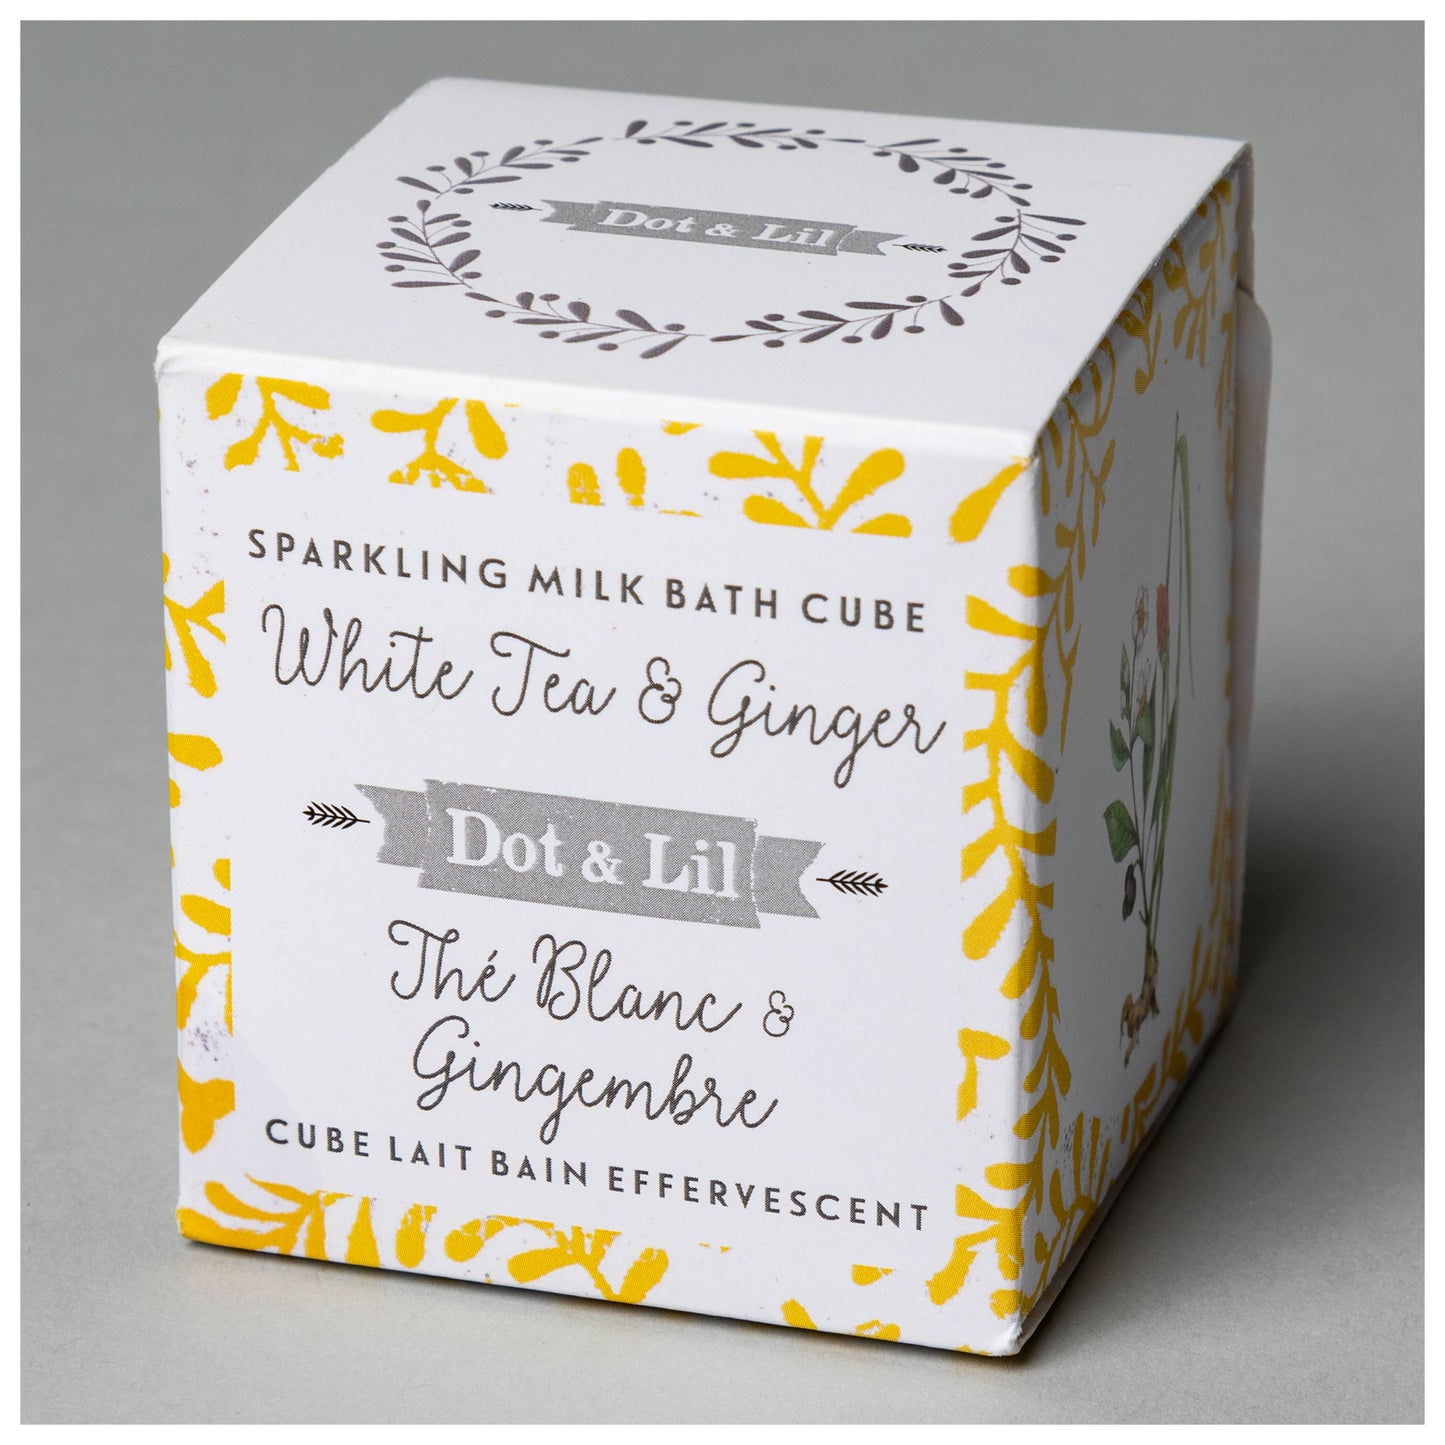 White Tea & Ginger Sparkling Milk Bath Cube